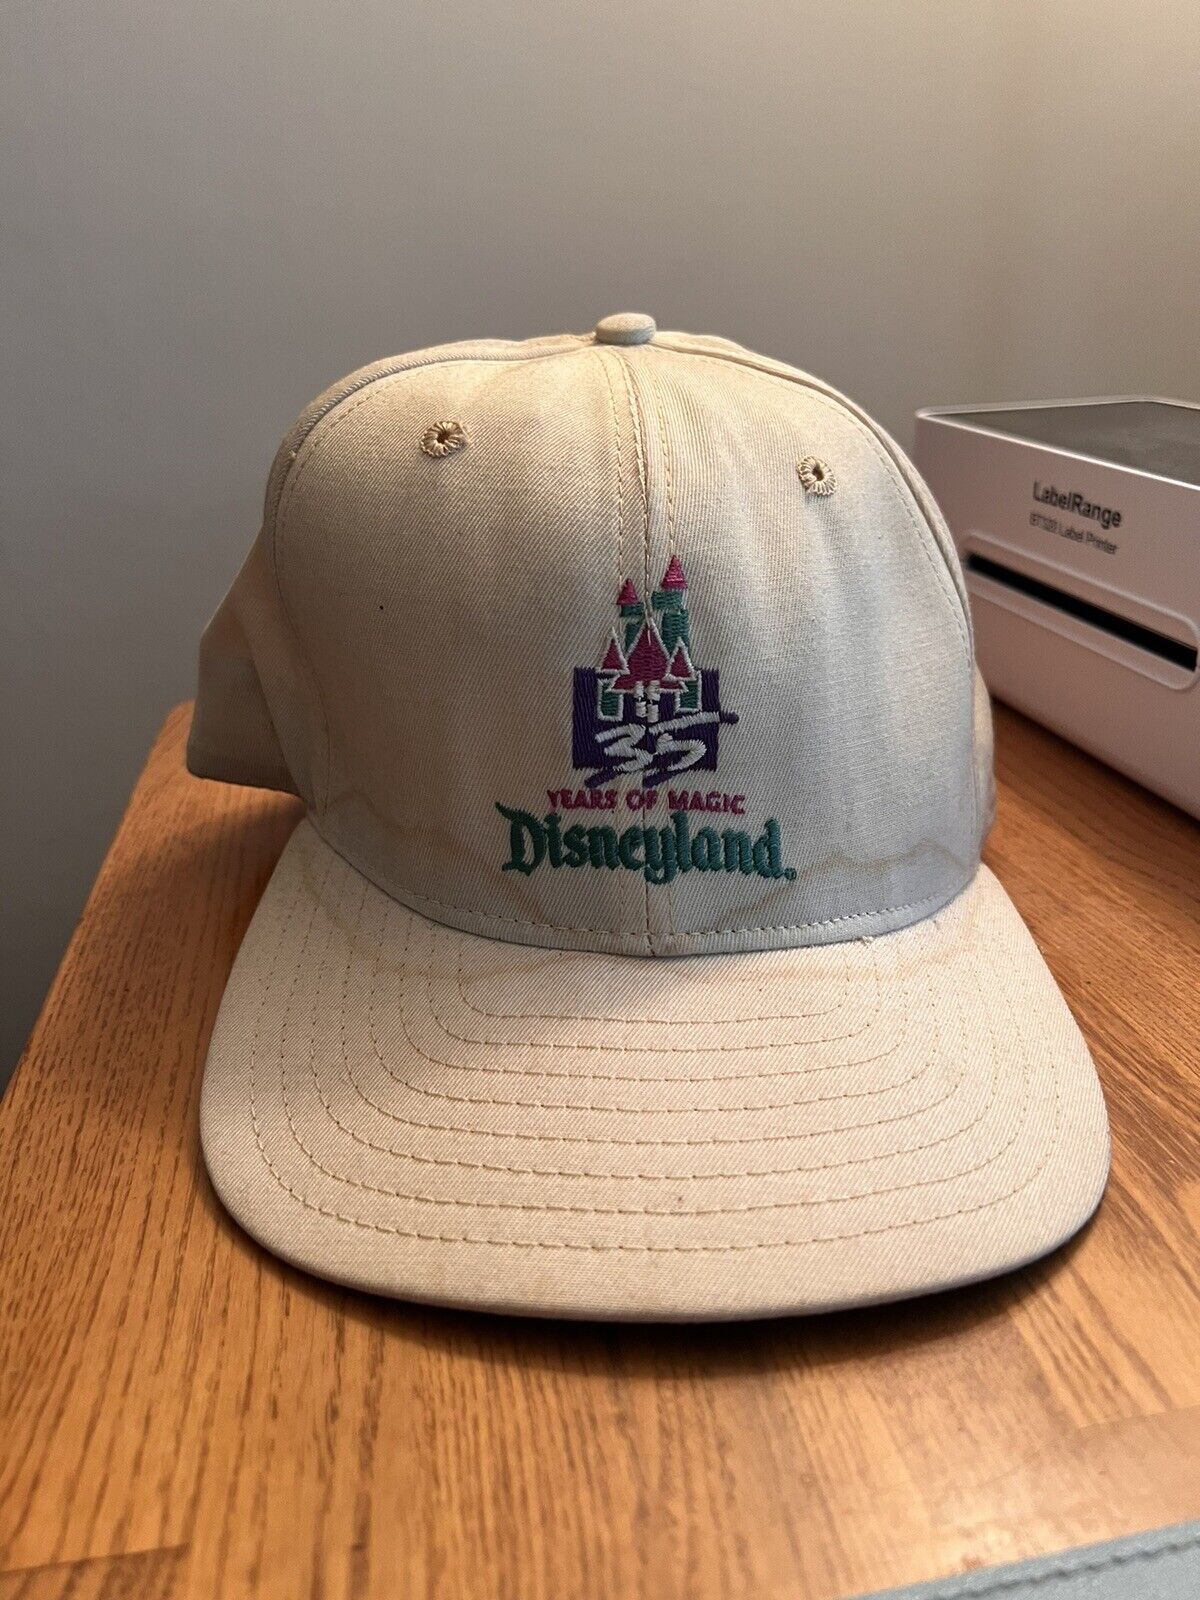 1990 Vintage Disneyland 35 Years Of Magic SnapBack Hat New Era, Made In USA